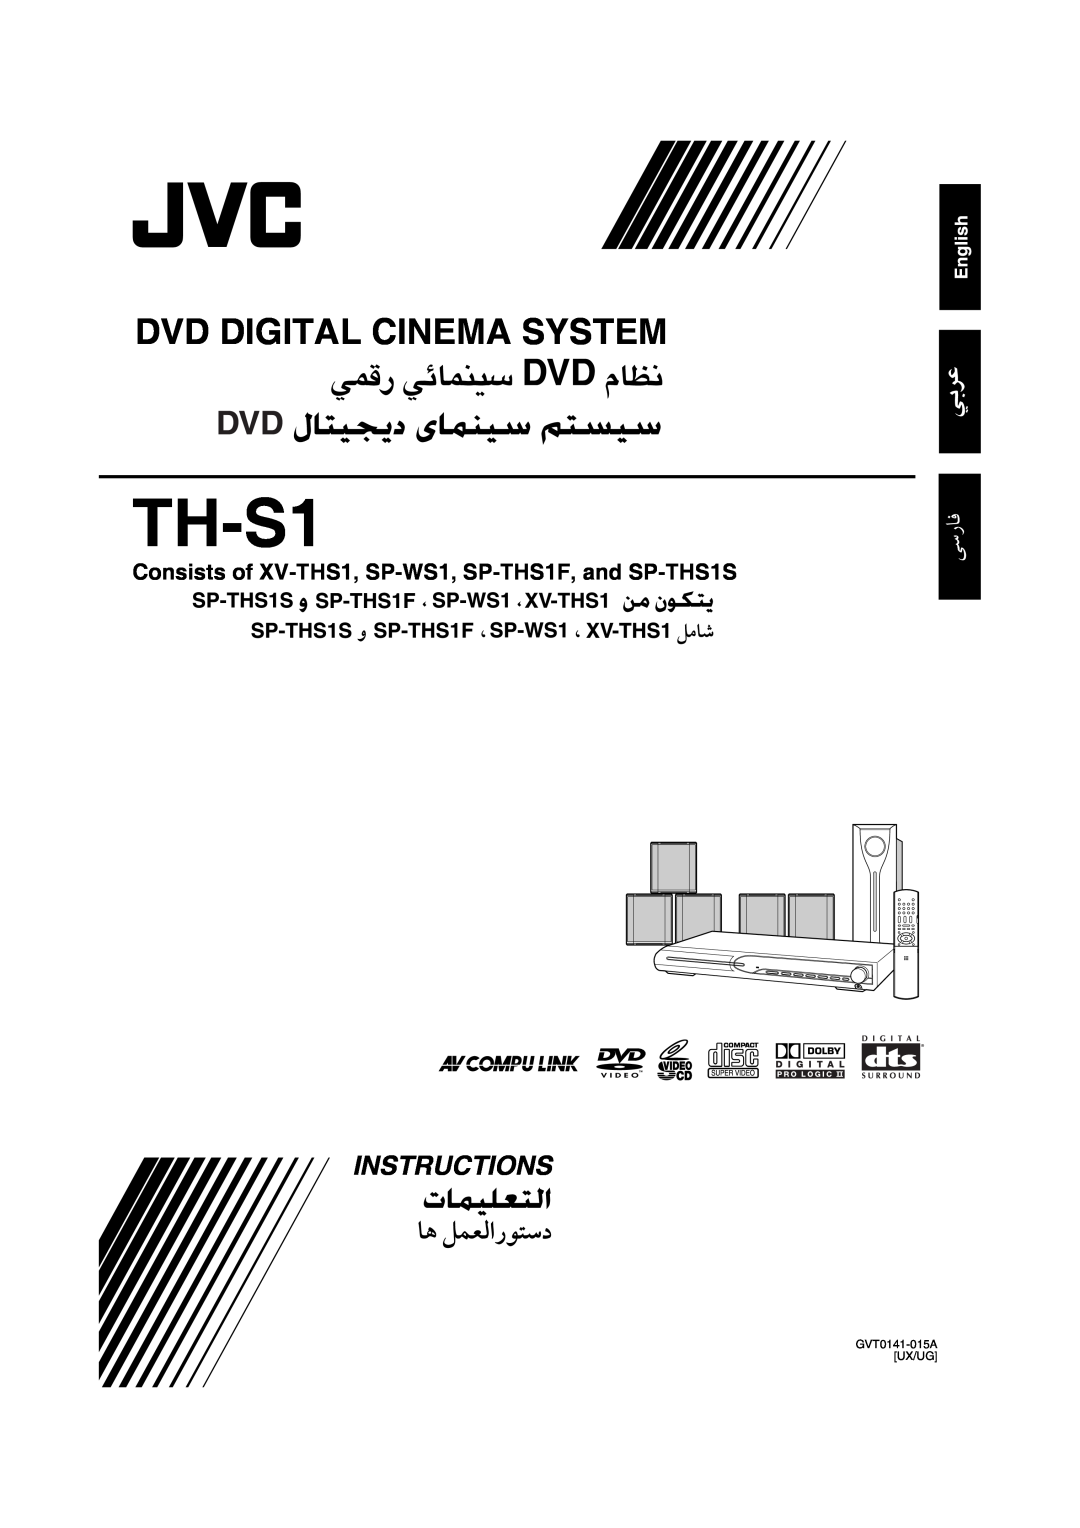 JVC GVT0141-003A manual TH-S1, Dvd Digital Cinema System, Instructions, GVT0141-015AUX/UG 